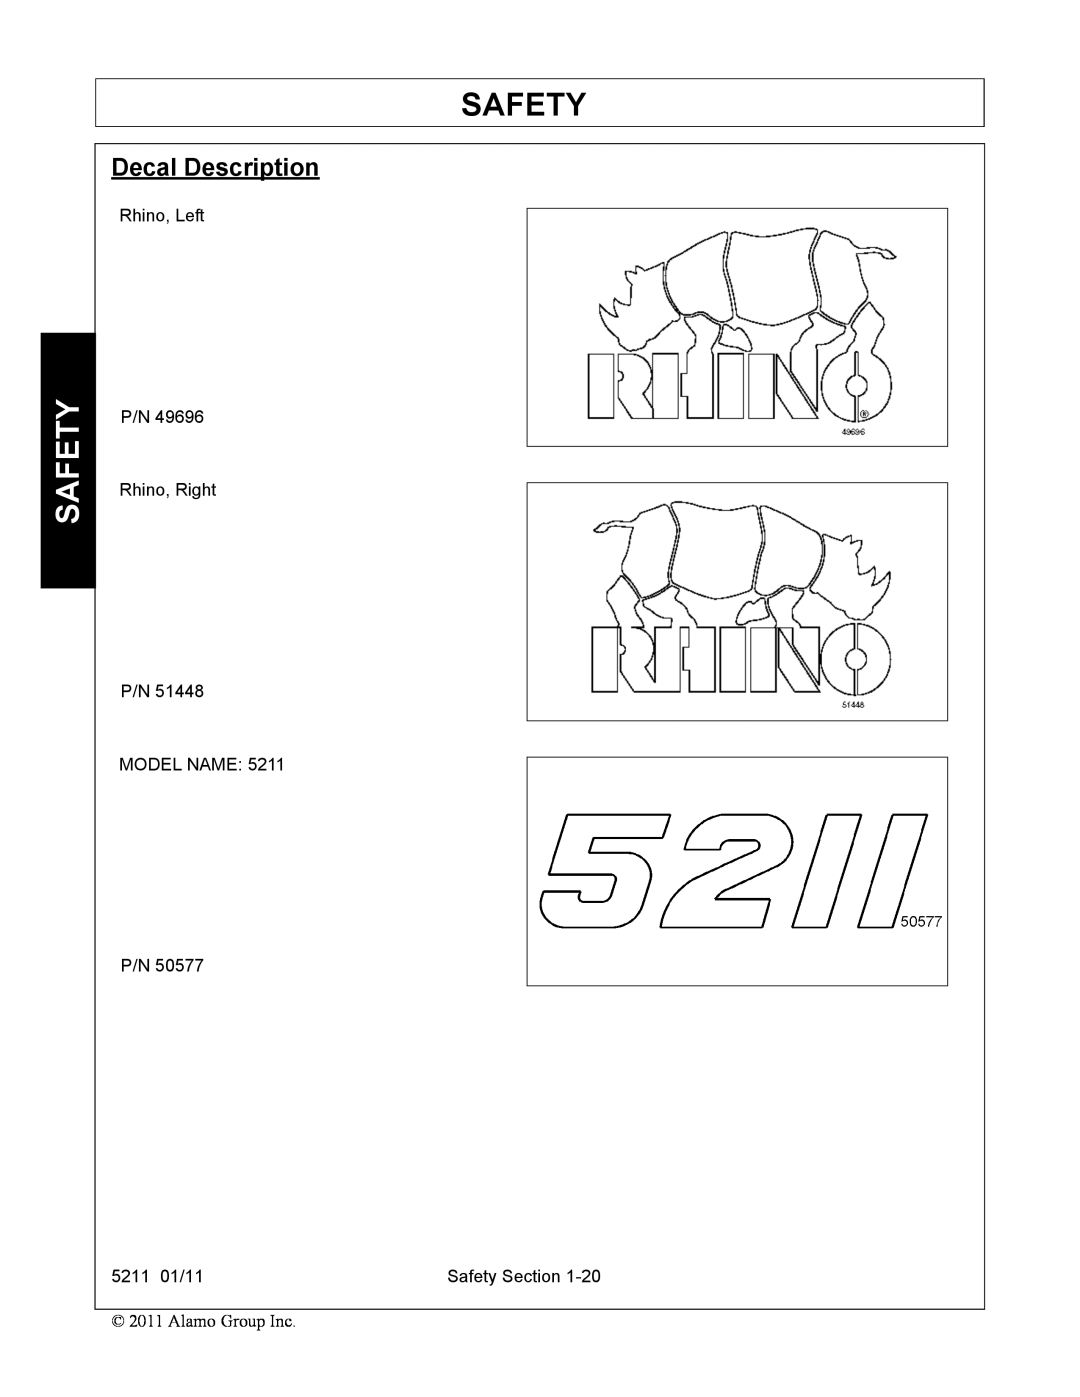 Servis-Rhino 5211 manual Safety, Decal Description 